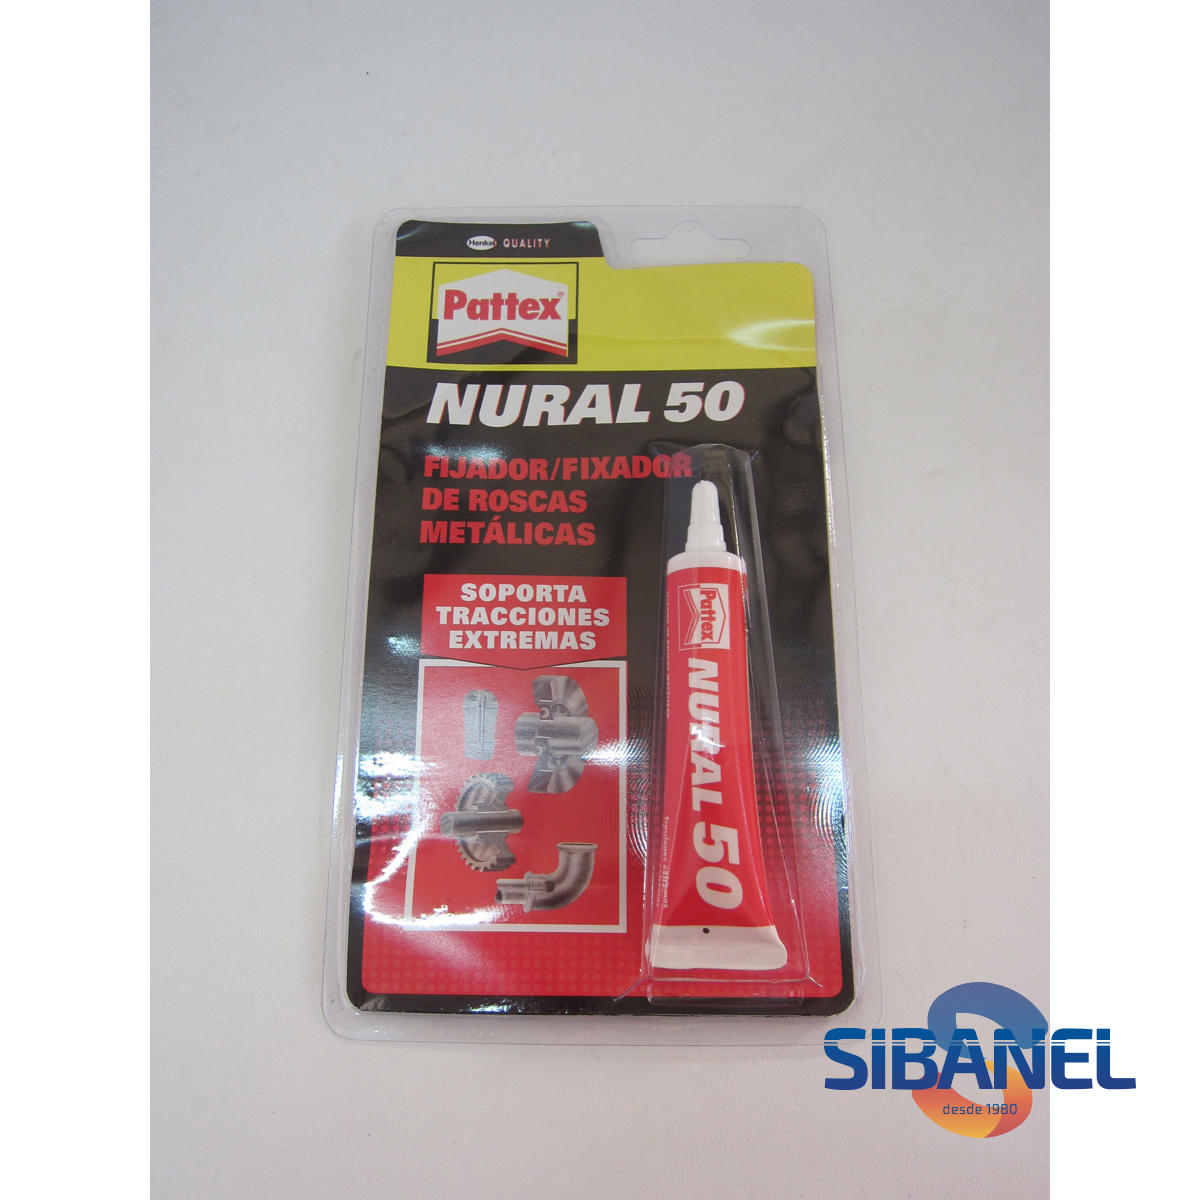 Nural 21 - Sibanel - Since 1980